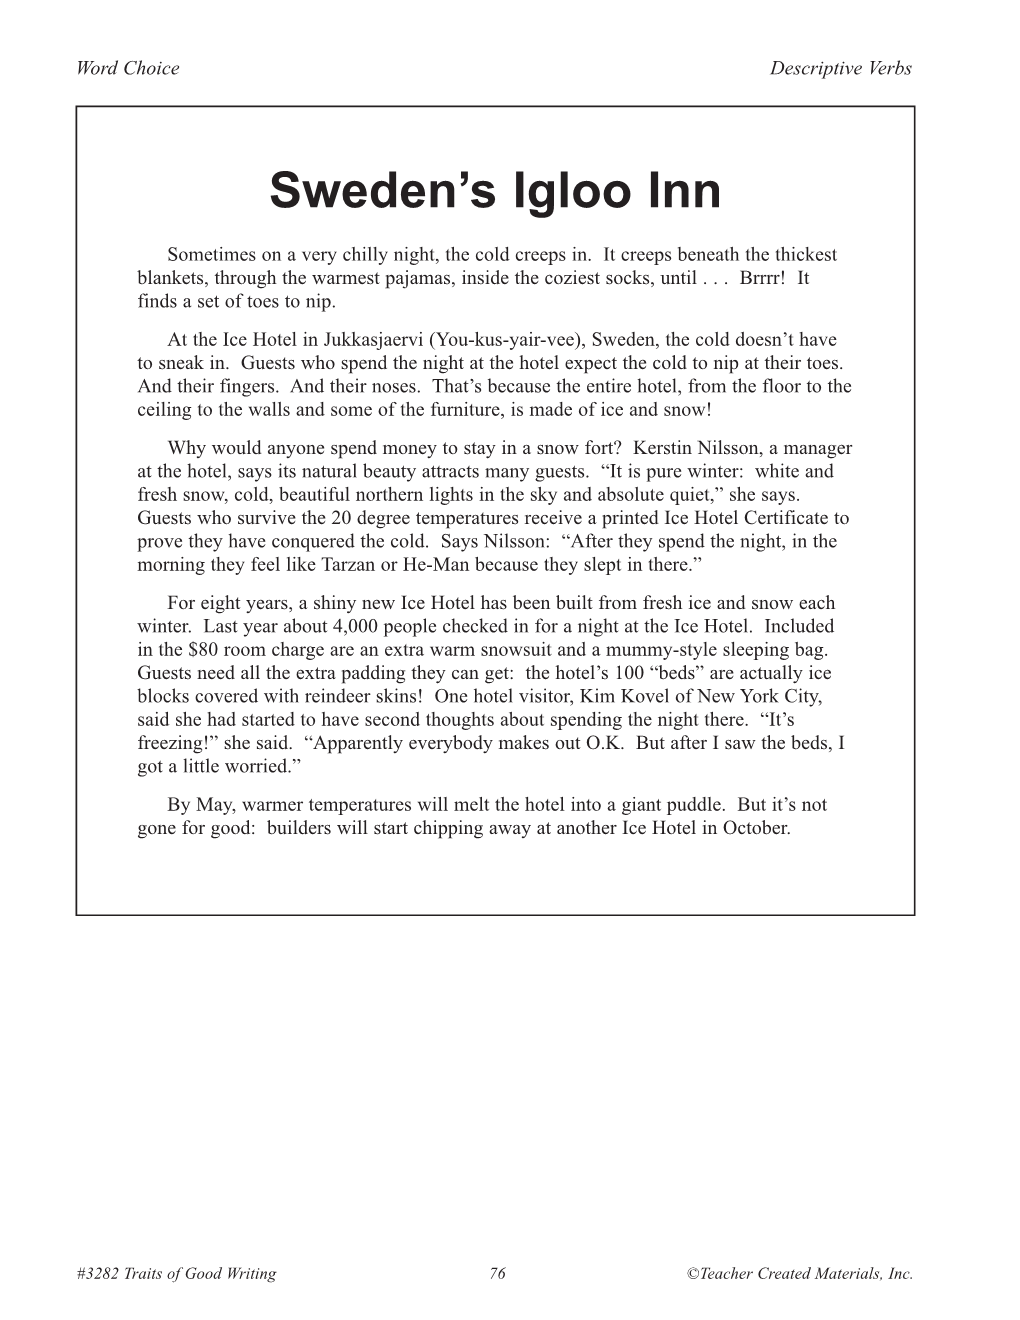 Sweden's Igloo